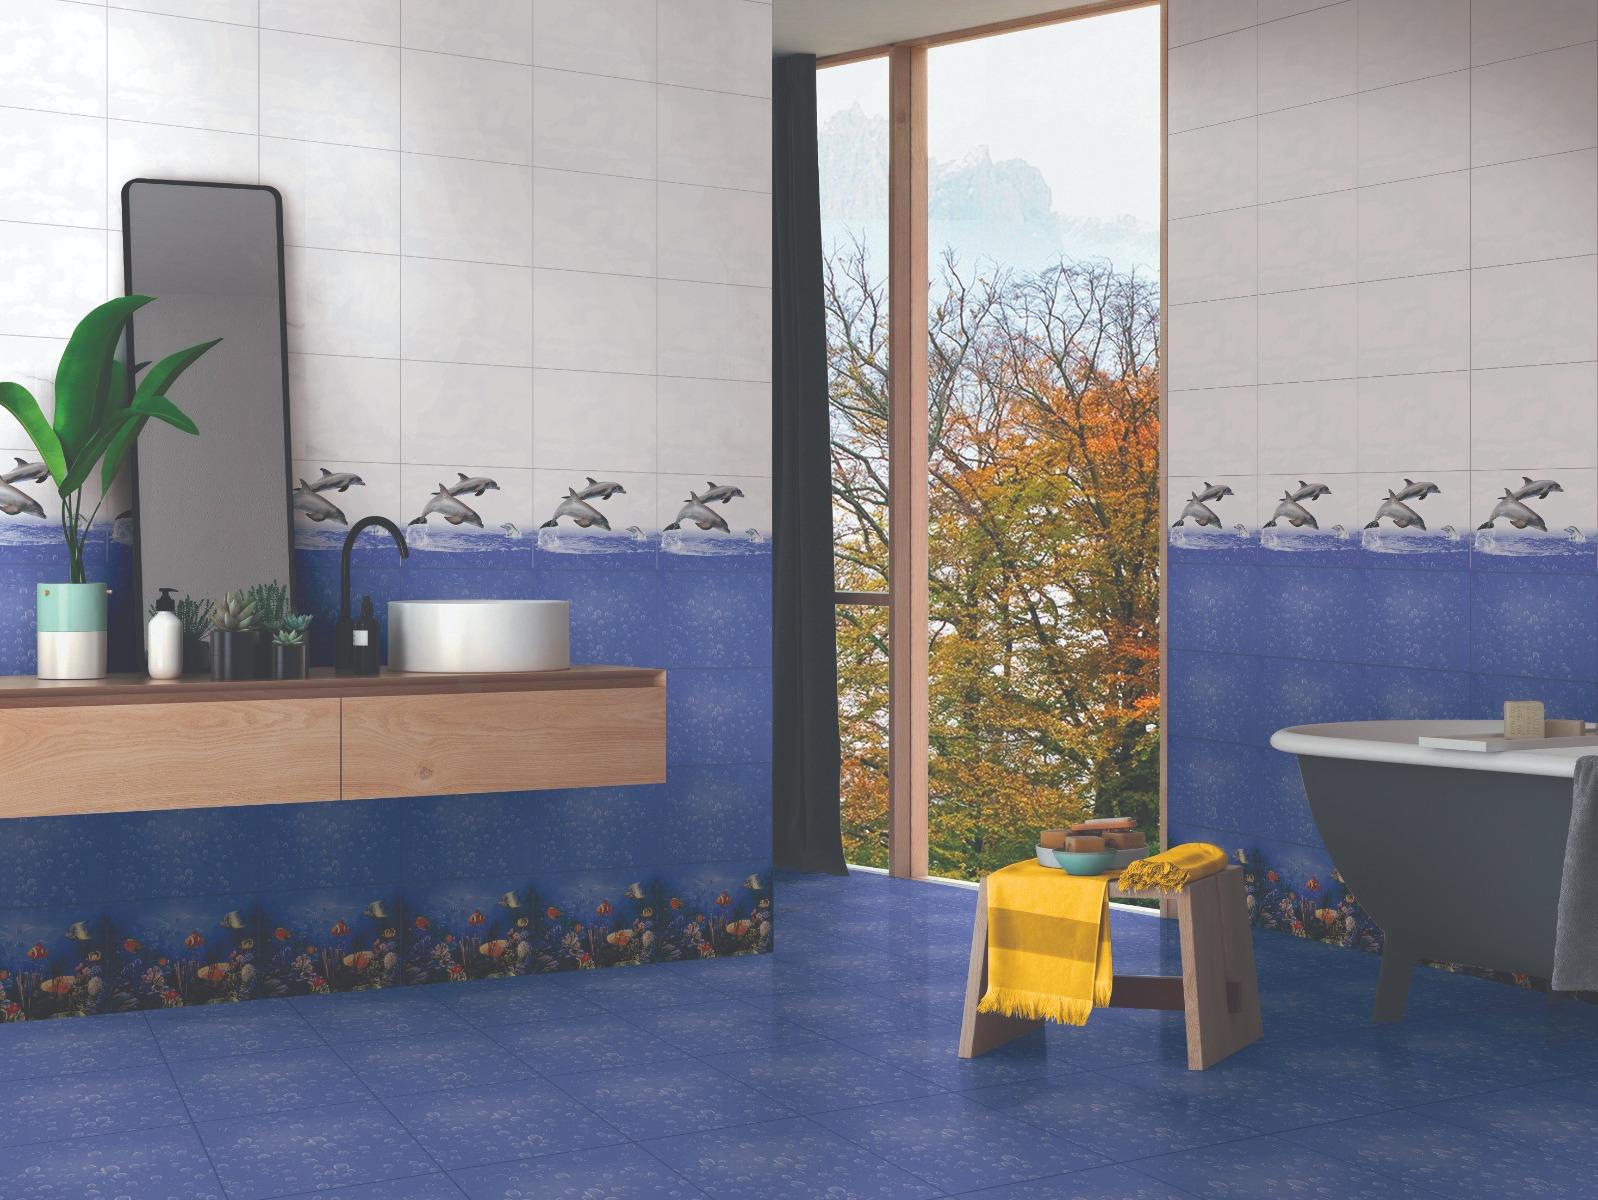 Super Glossy Tiles for Bathroom Tiles, Accent Tiles